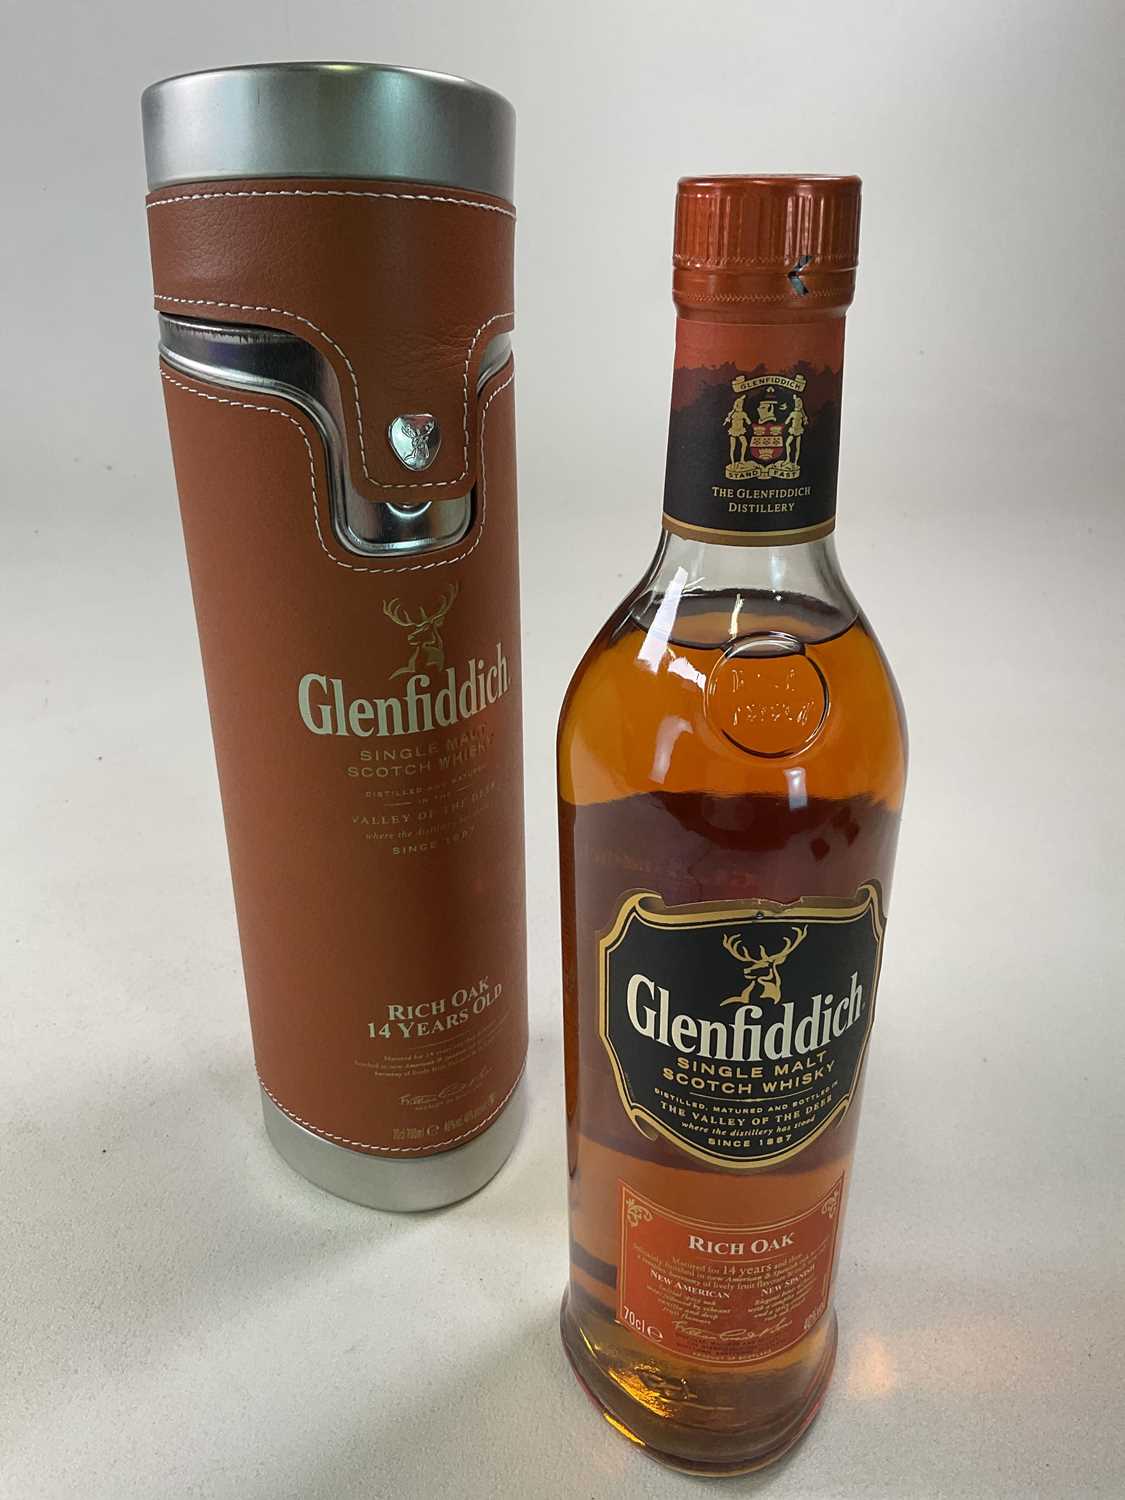 WHISKY; a bottle of Glenfiddich Single Malt Scotch whisky, Rich Oak, aged 14 years, 40%, 70cl, in